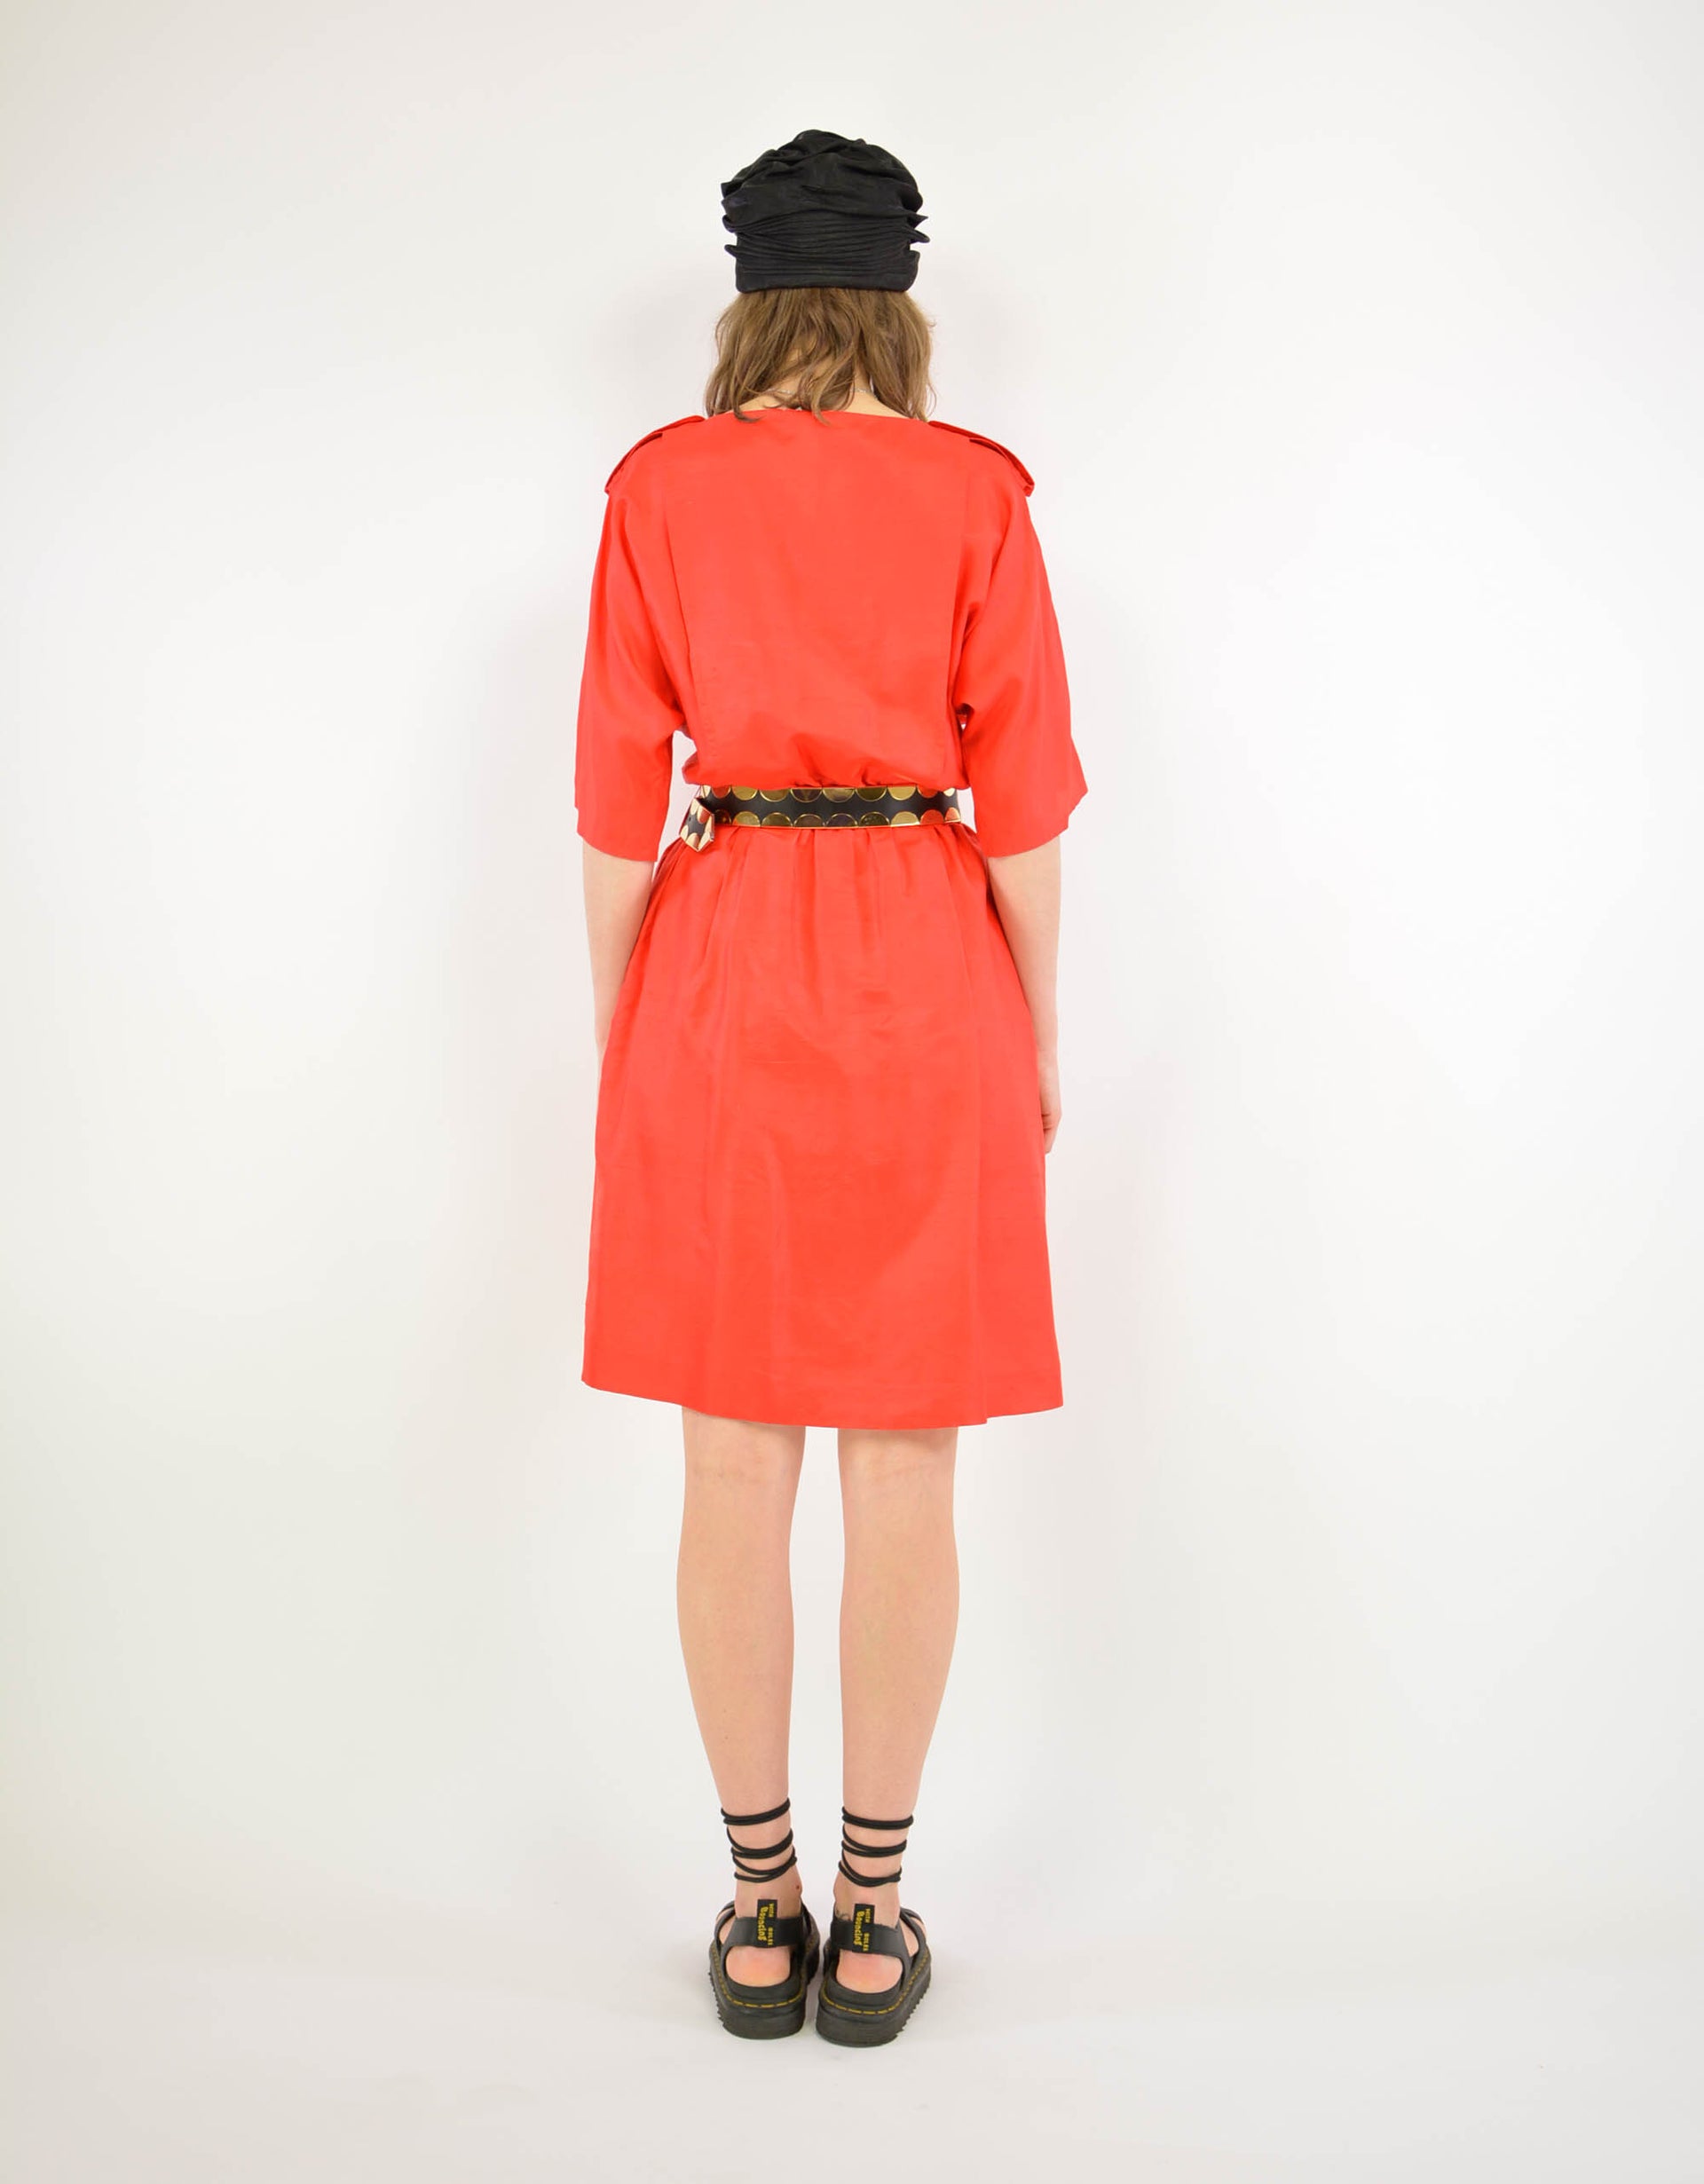 Red silk dress - PICKNWEIGHT - VINTAGE KILO STORE